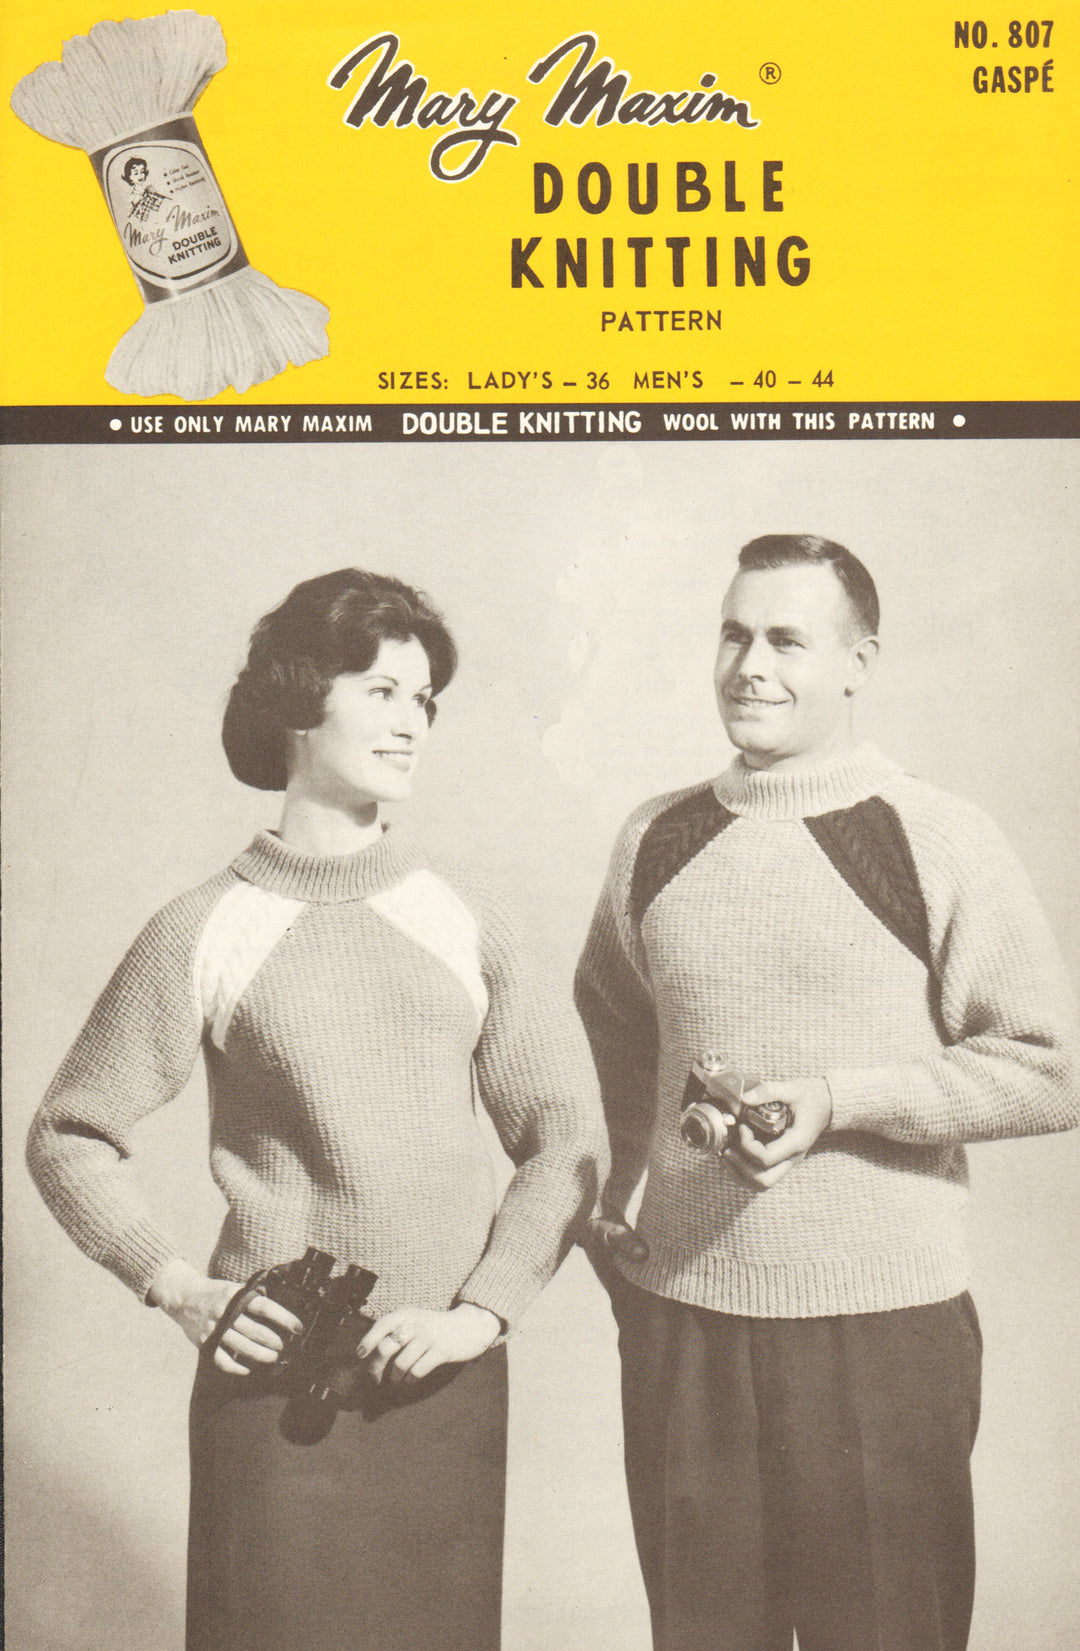 Gaspe Sweater Pattern